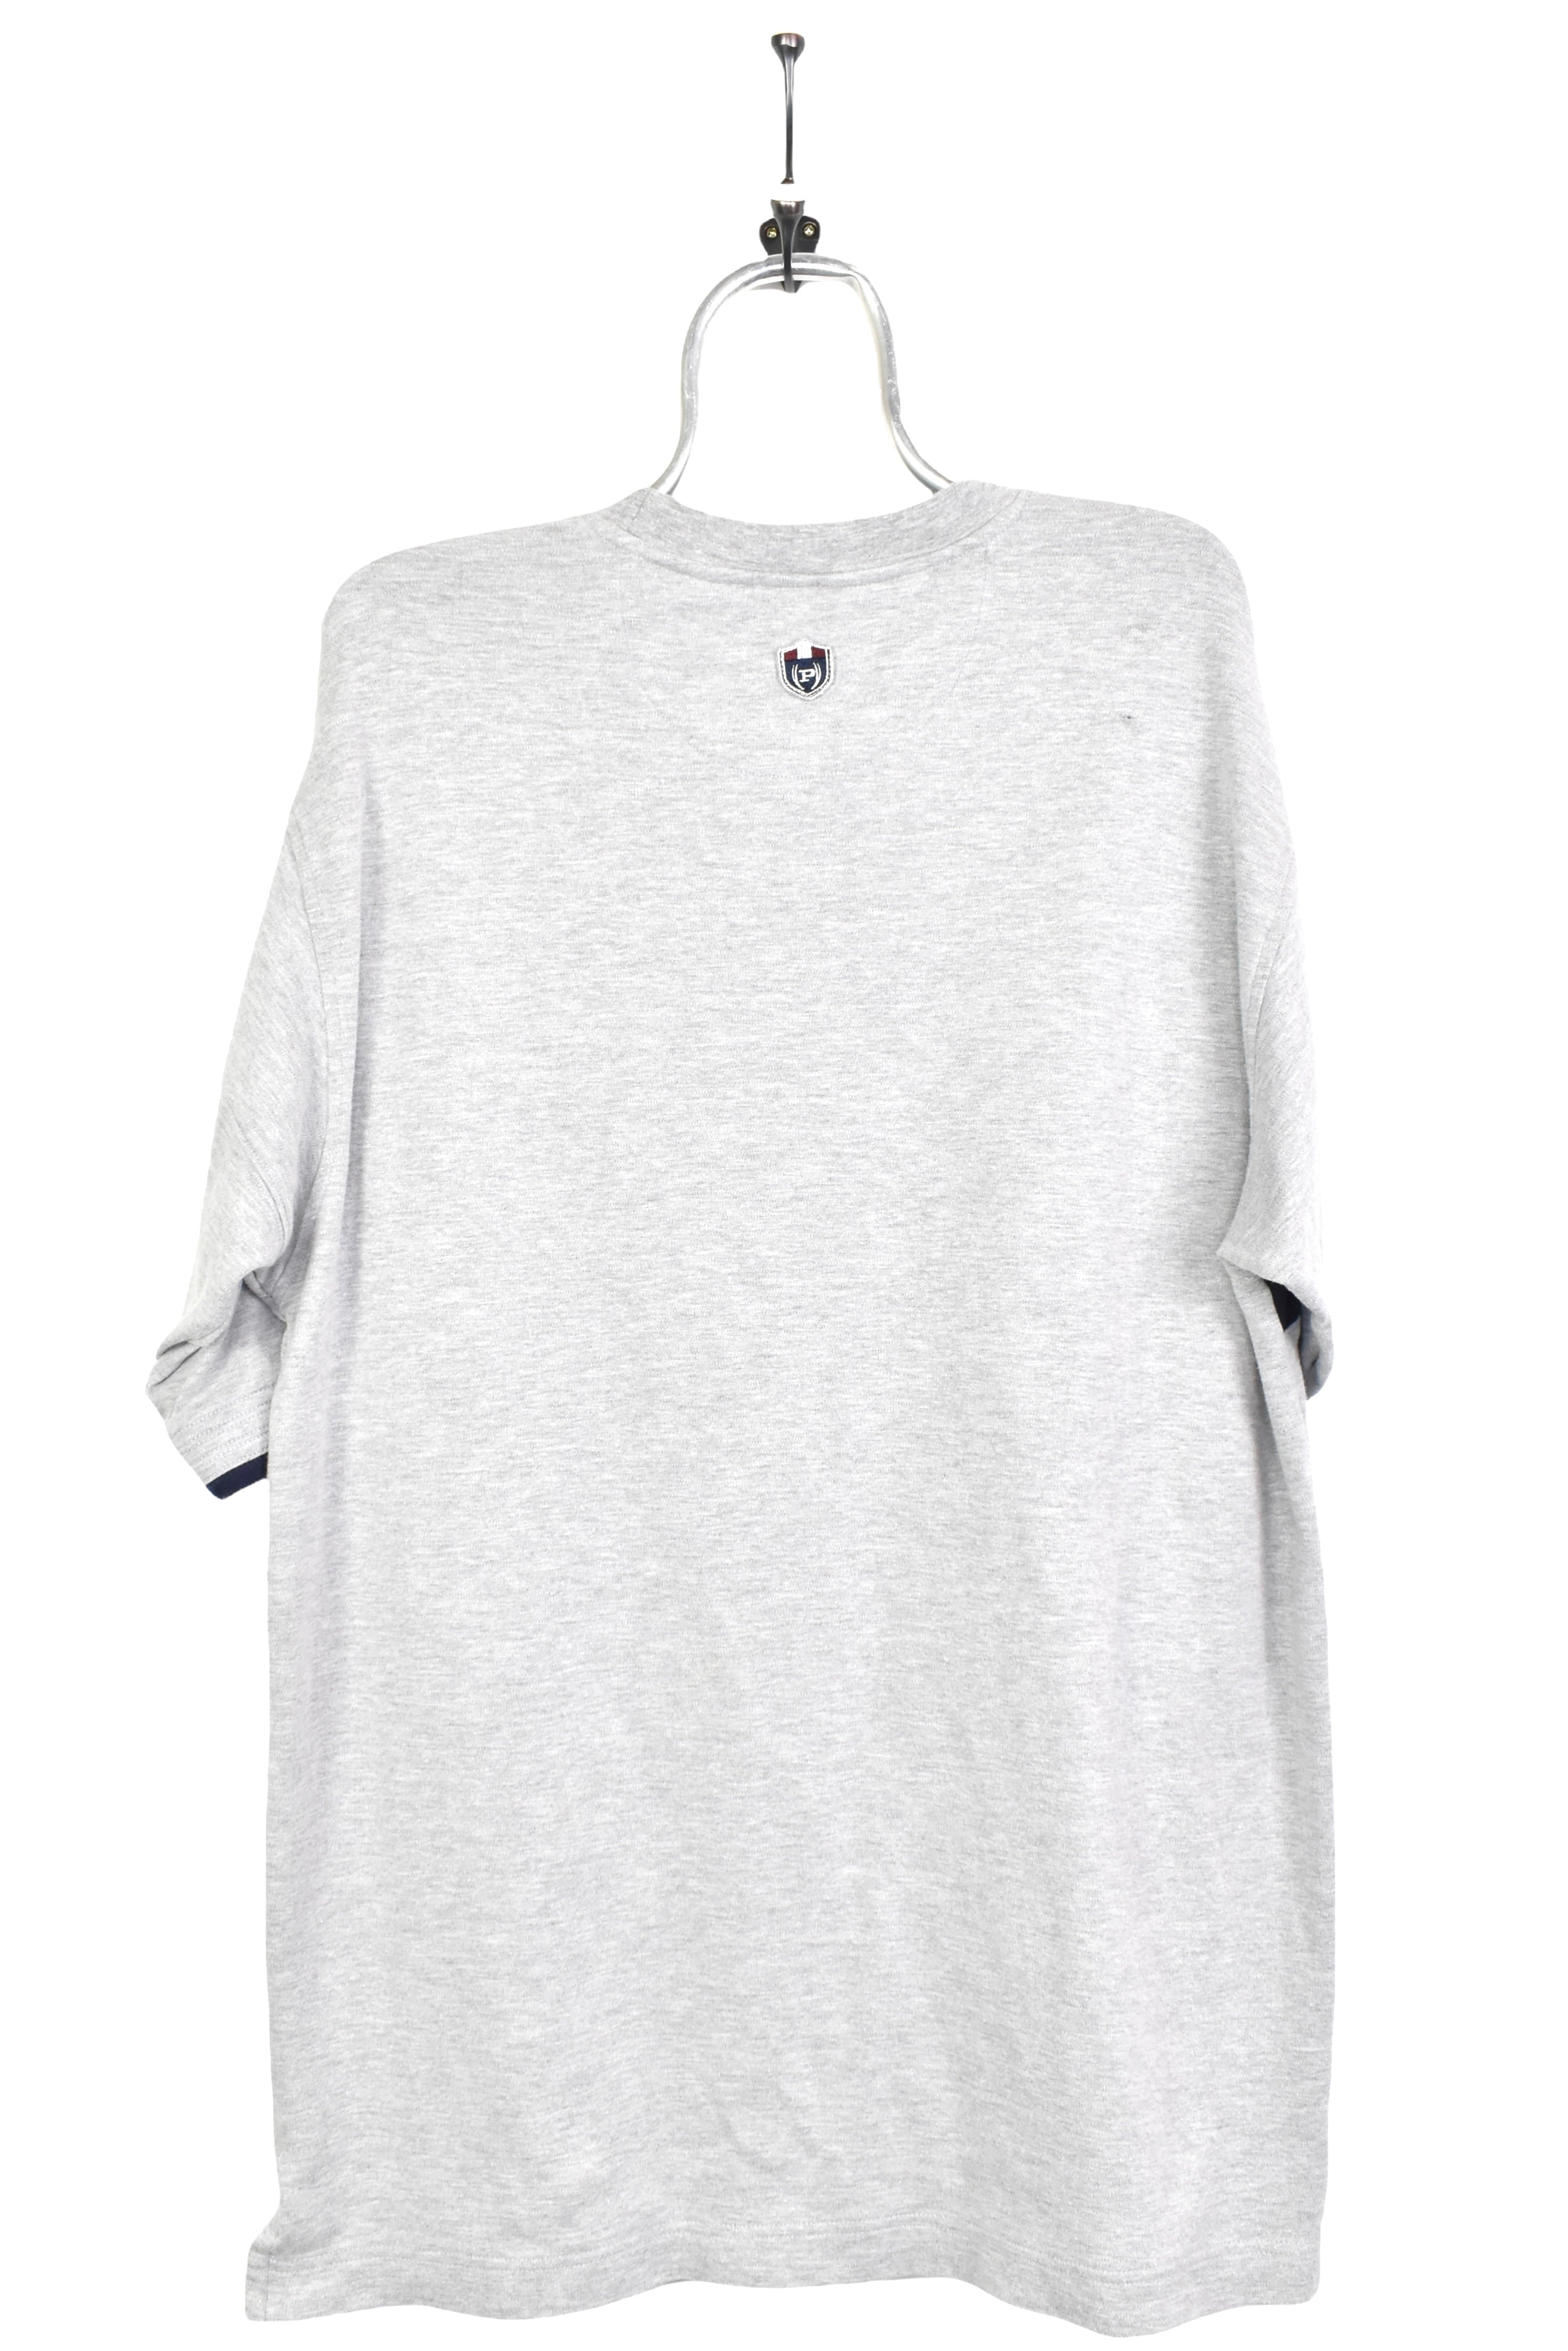 Modern Phat Farm shirt, short sleeve grey graphic tee - AU XL OTHER